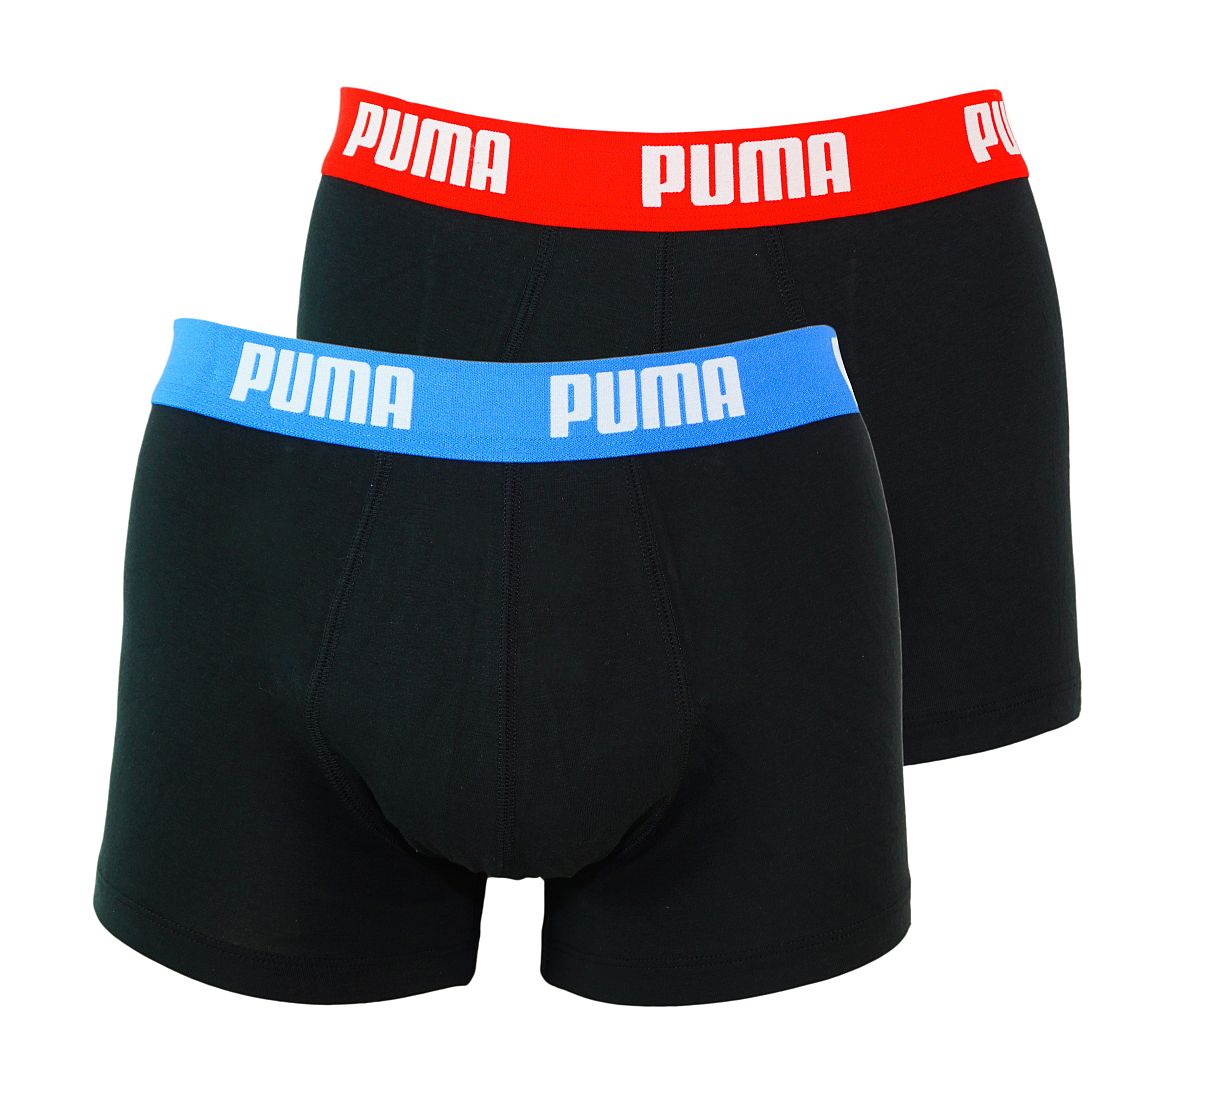 PUMA Shorts Unterhosen 2er Pack Trunk 521025001 505 020 red, blue SF17-PMS1